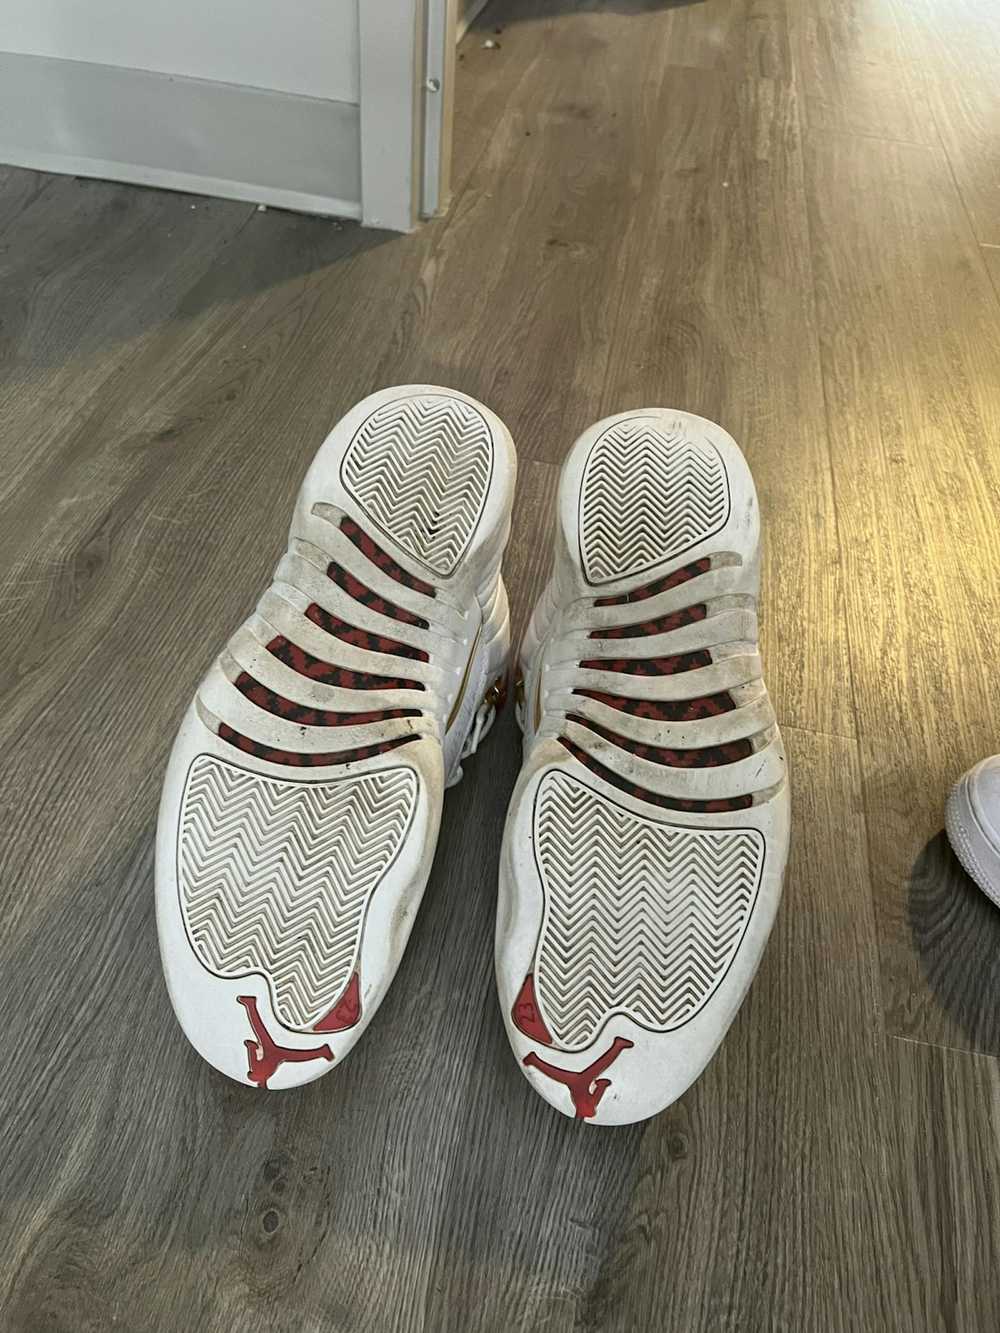 Jordan Brand × Nike Air Jordan 12 Retro “FIBA” - image 5